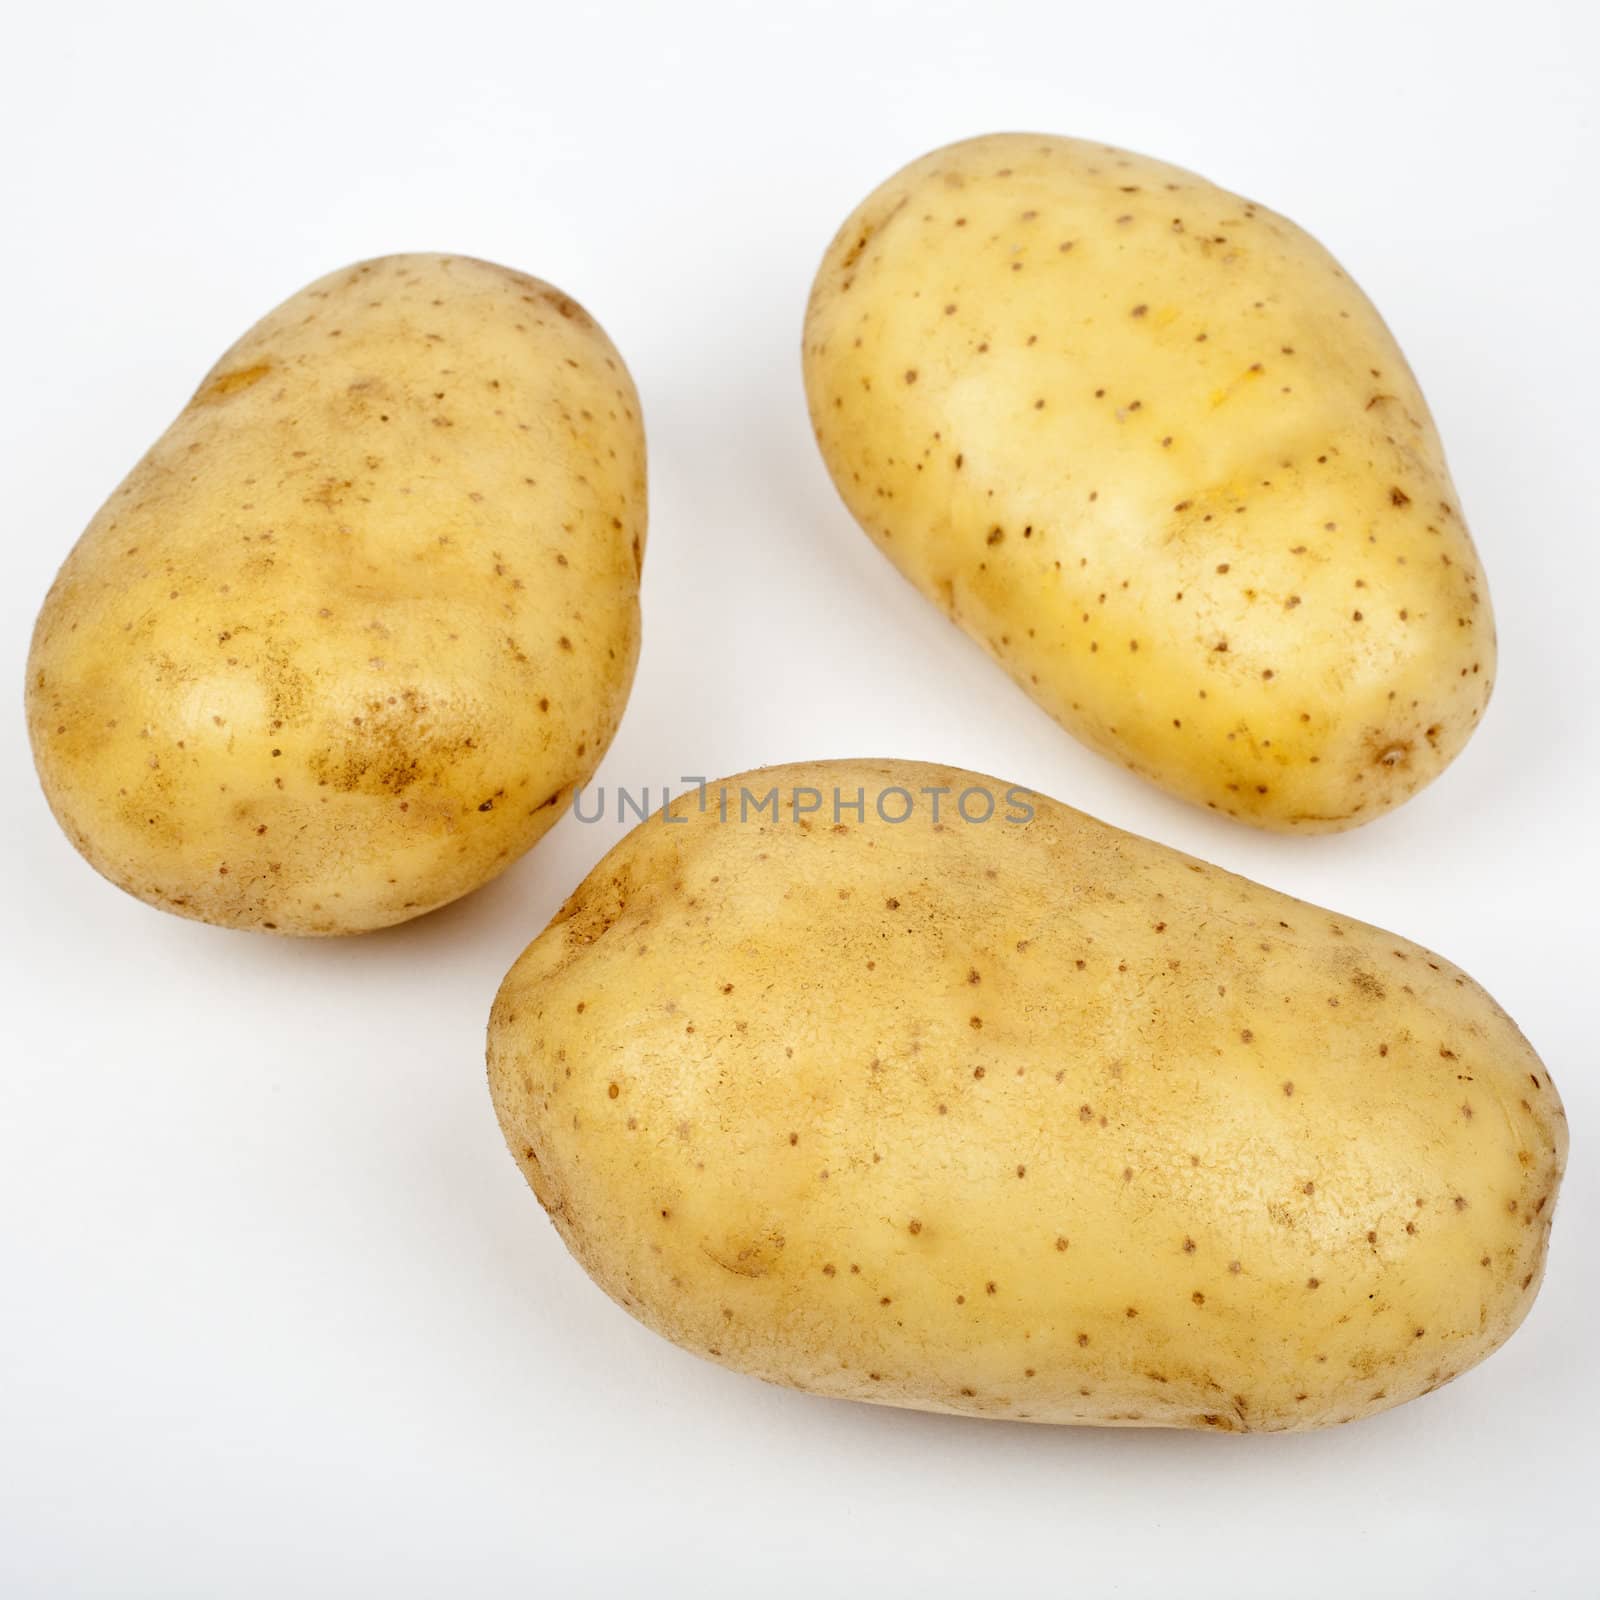 Potatoes by chrisdorney